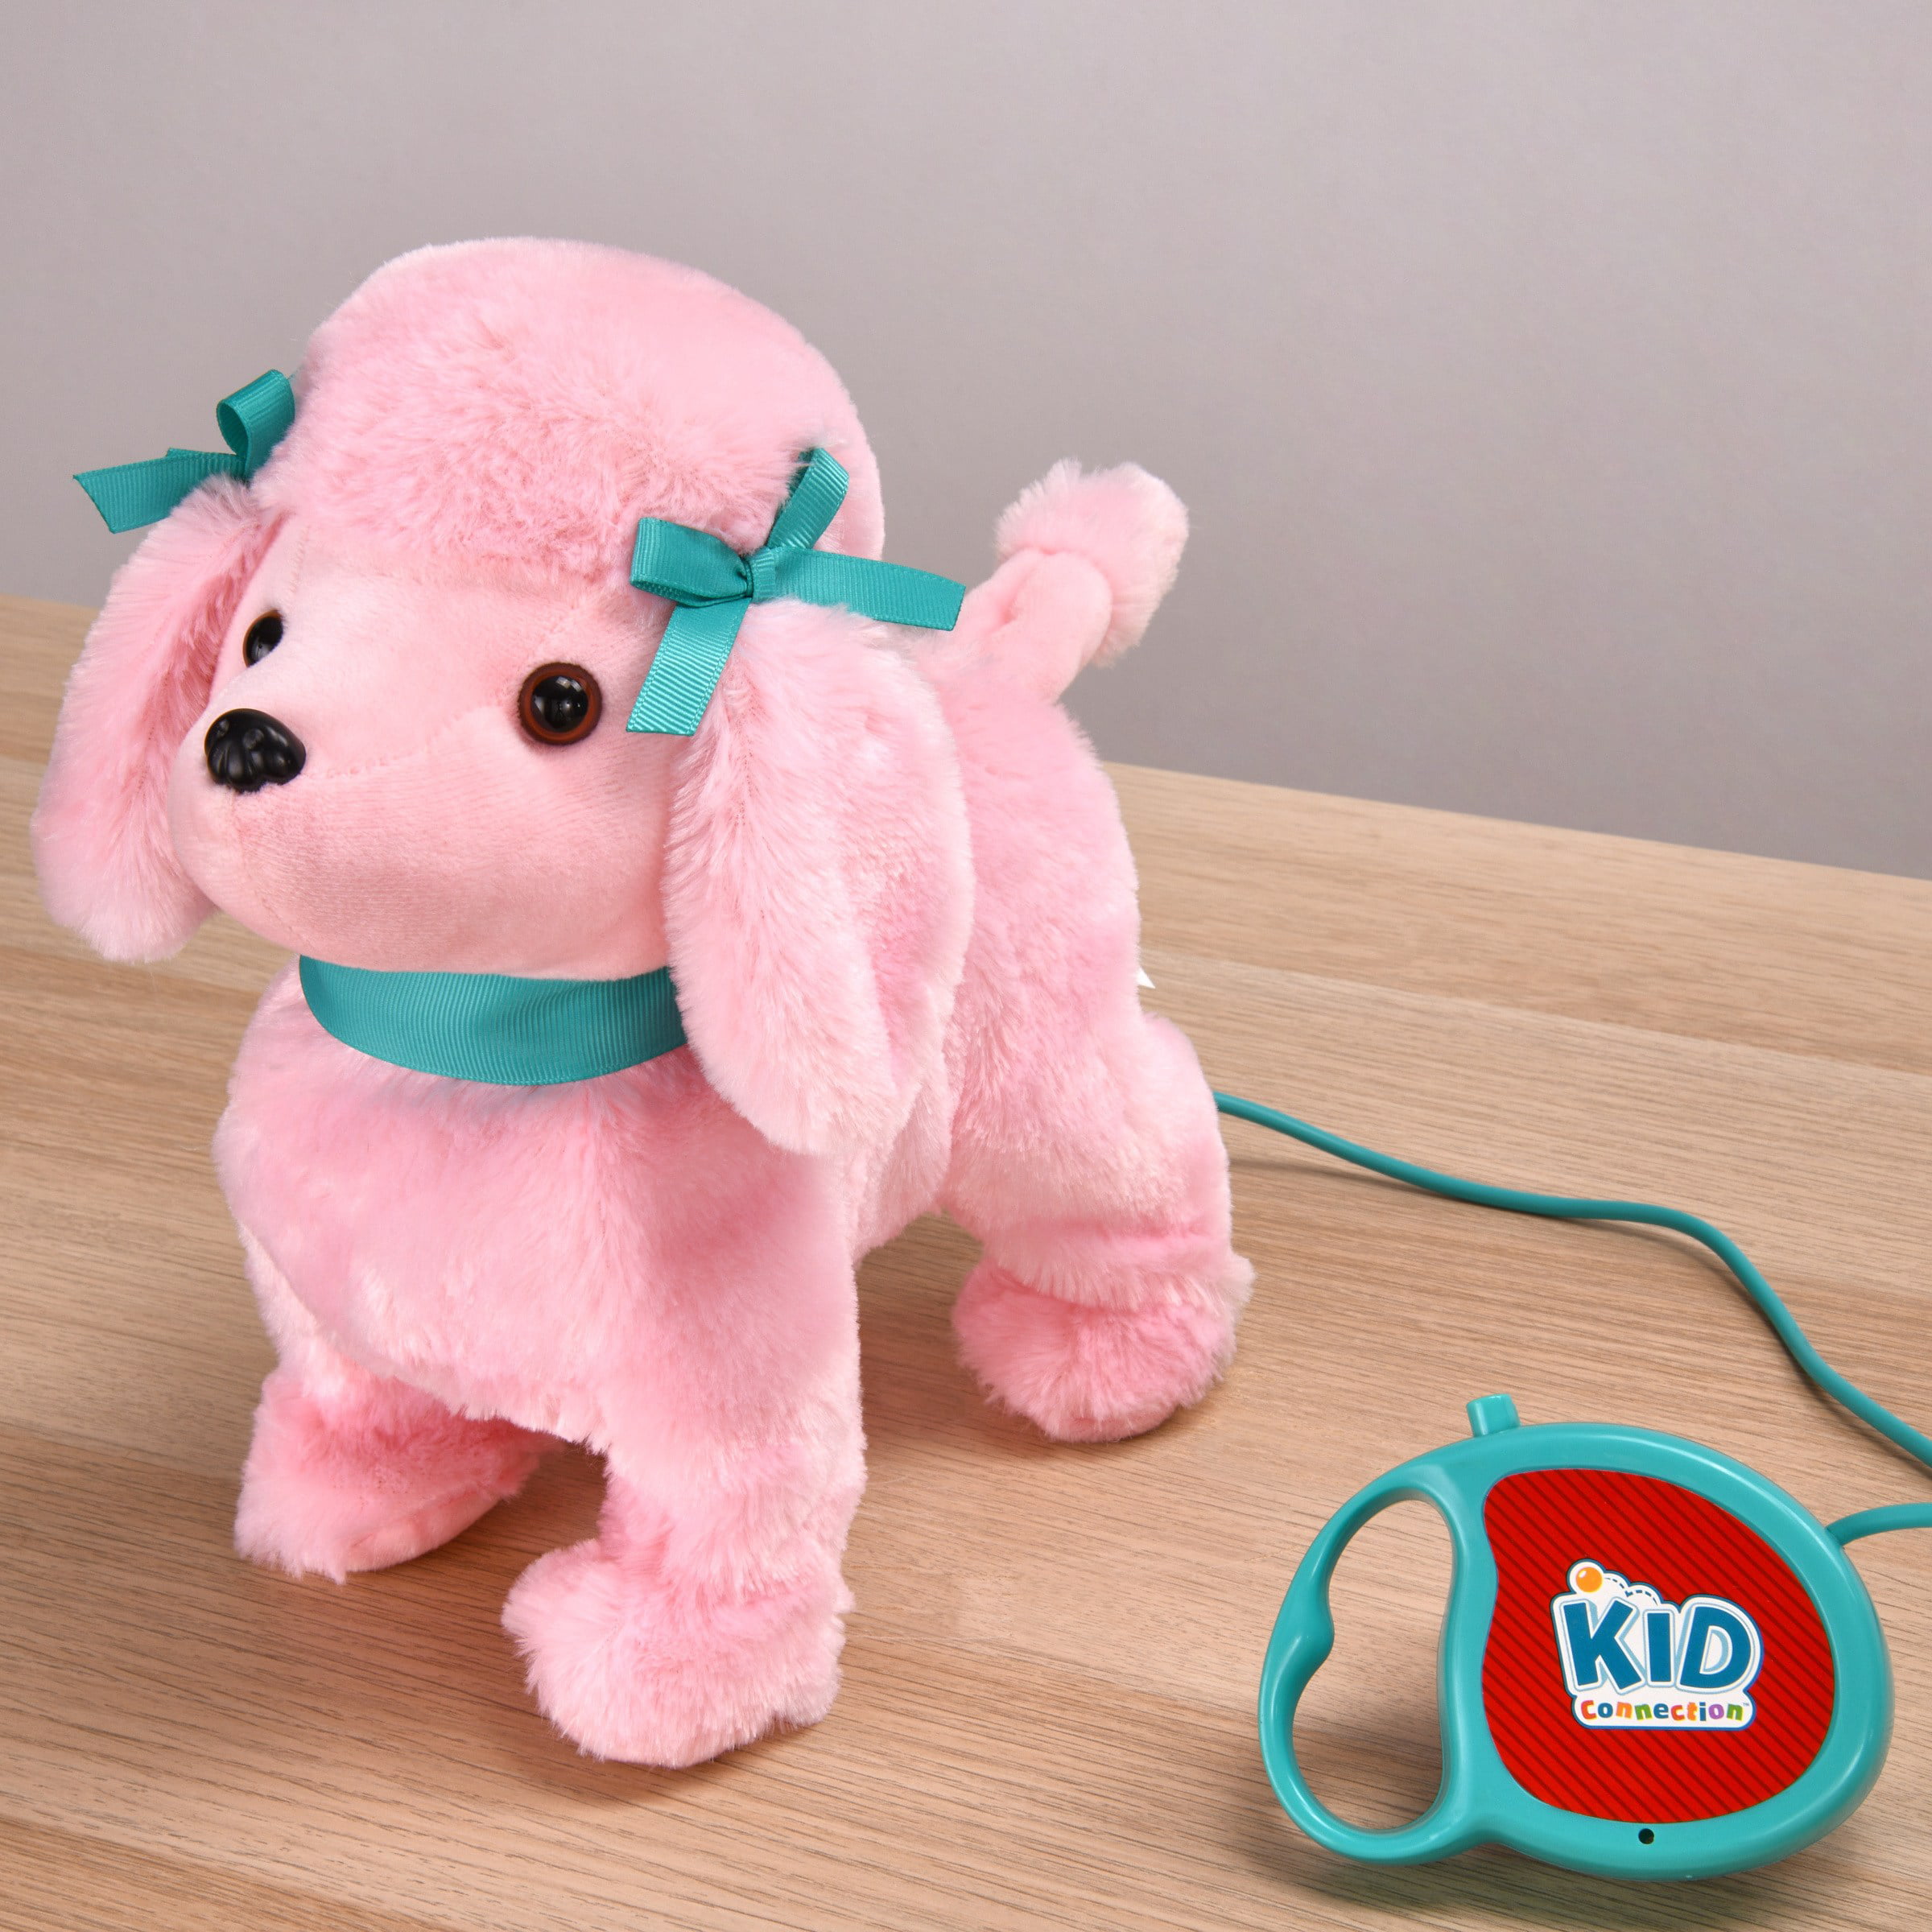 kid connection unicorn soft toy